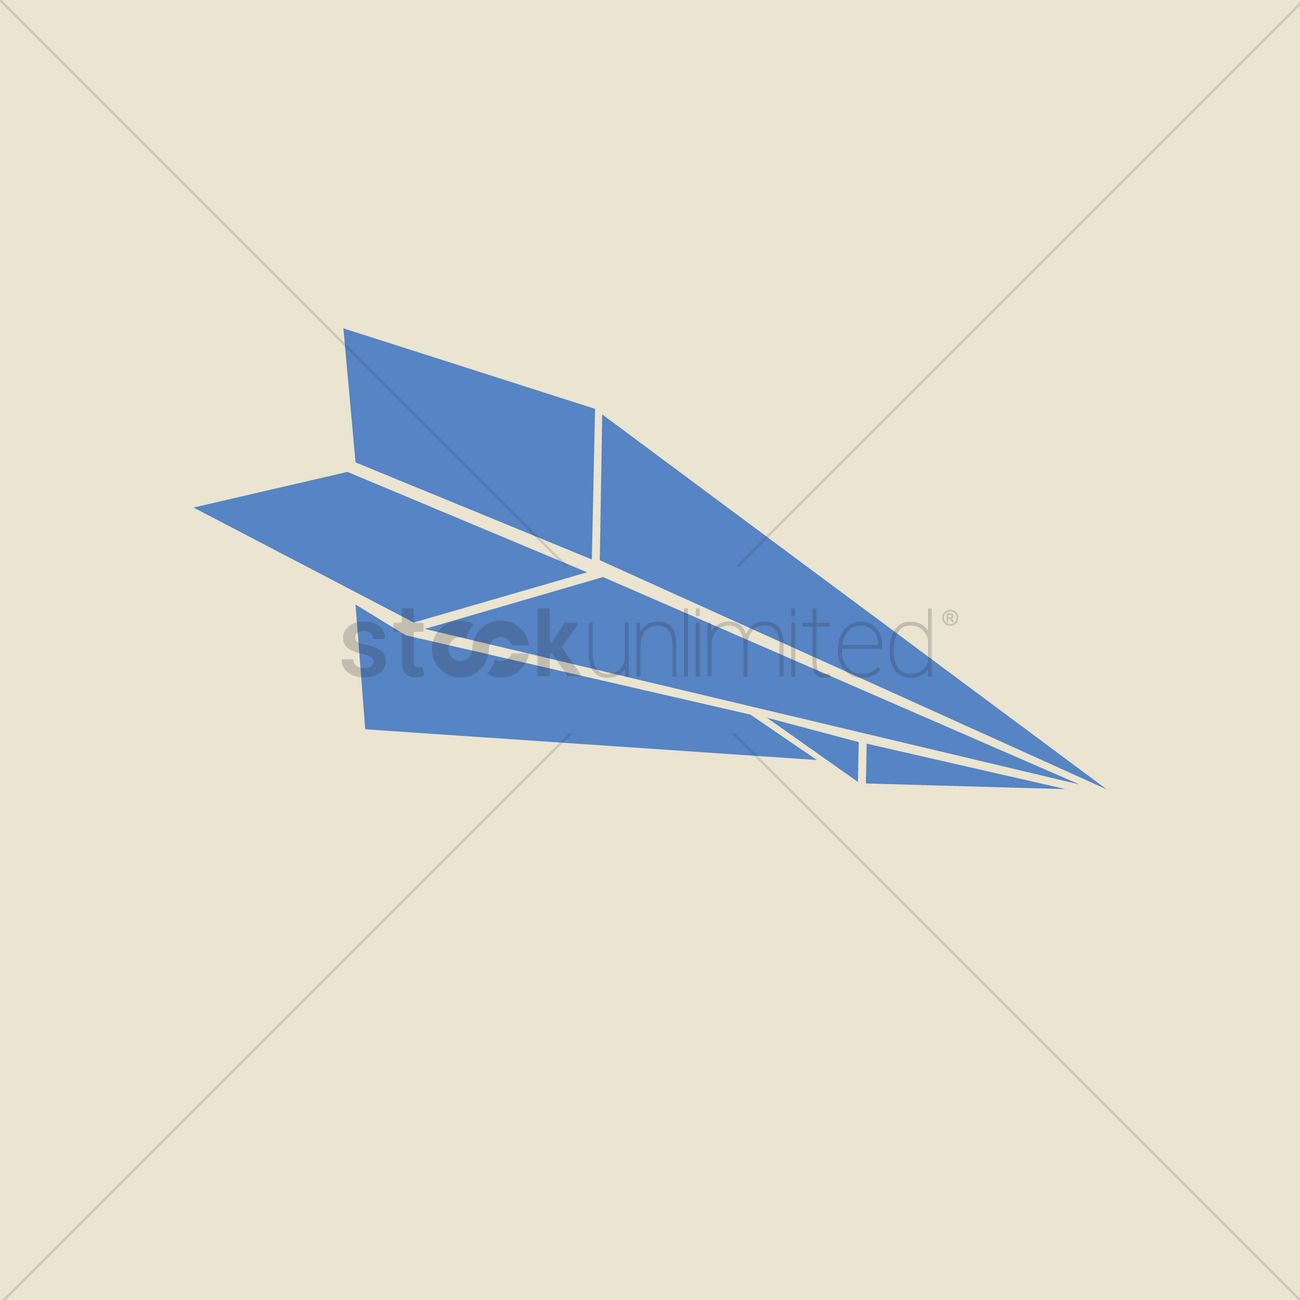 Origami Paper Airplanes Origami Paper Airplane Vector Image 1456297 Stockunlimited